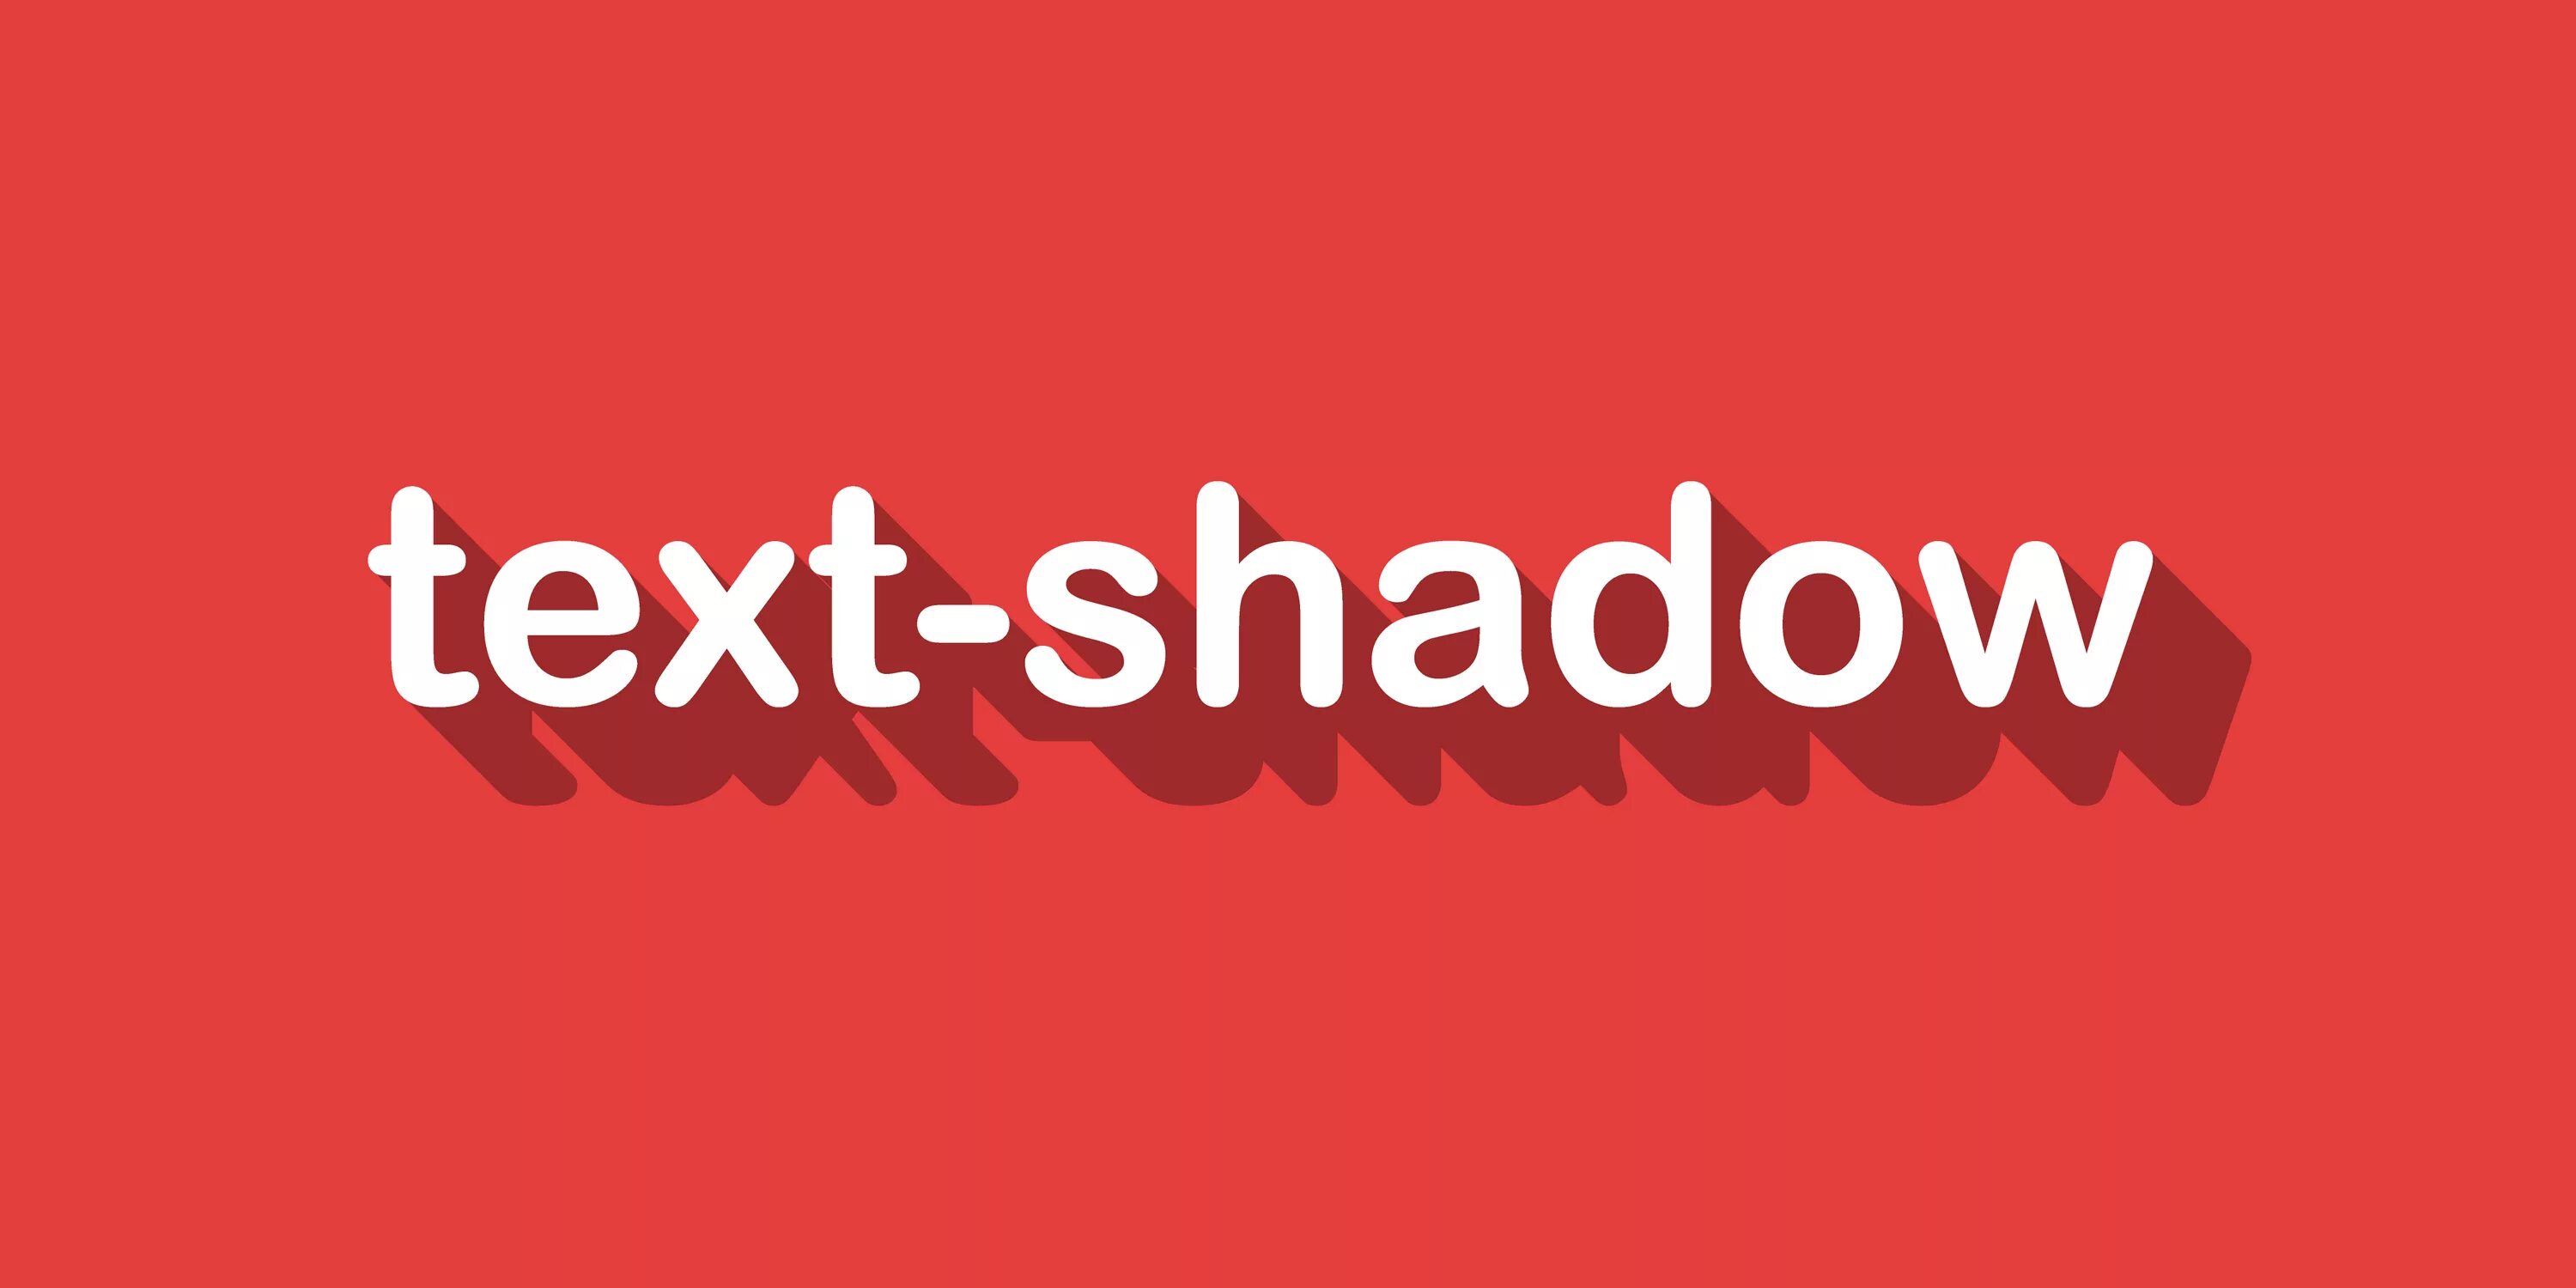 Text Shadow. Text Shadow CSS. Text Shadow text. Тени шрифта CSS. Шедоу текст